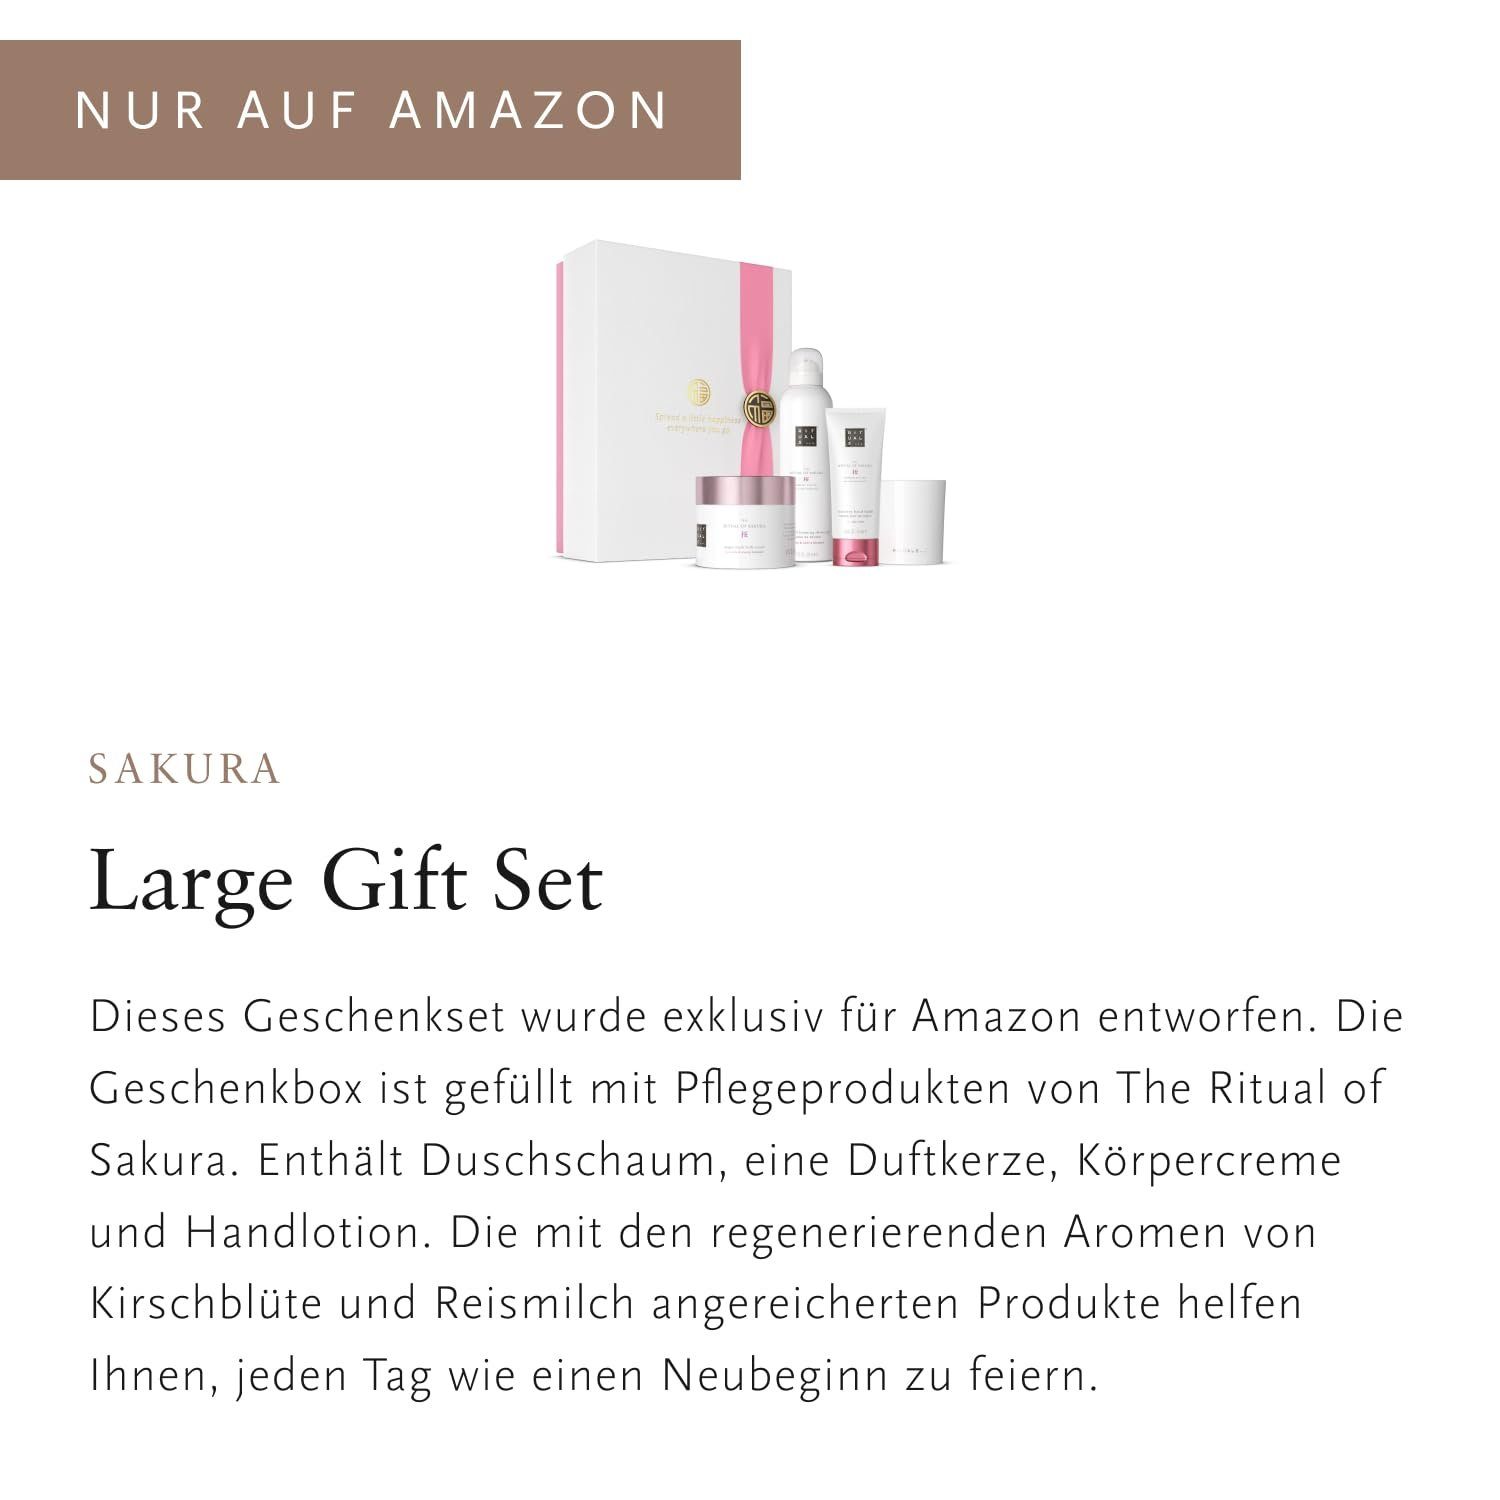 The Geschenkset mit Adventskalender, Produkten Ritual – Sakura, 4 Geschenkbox L of Rituals